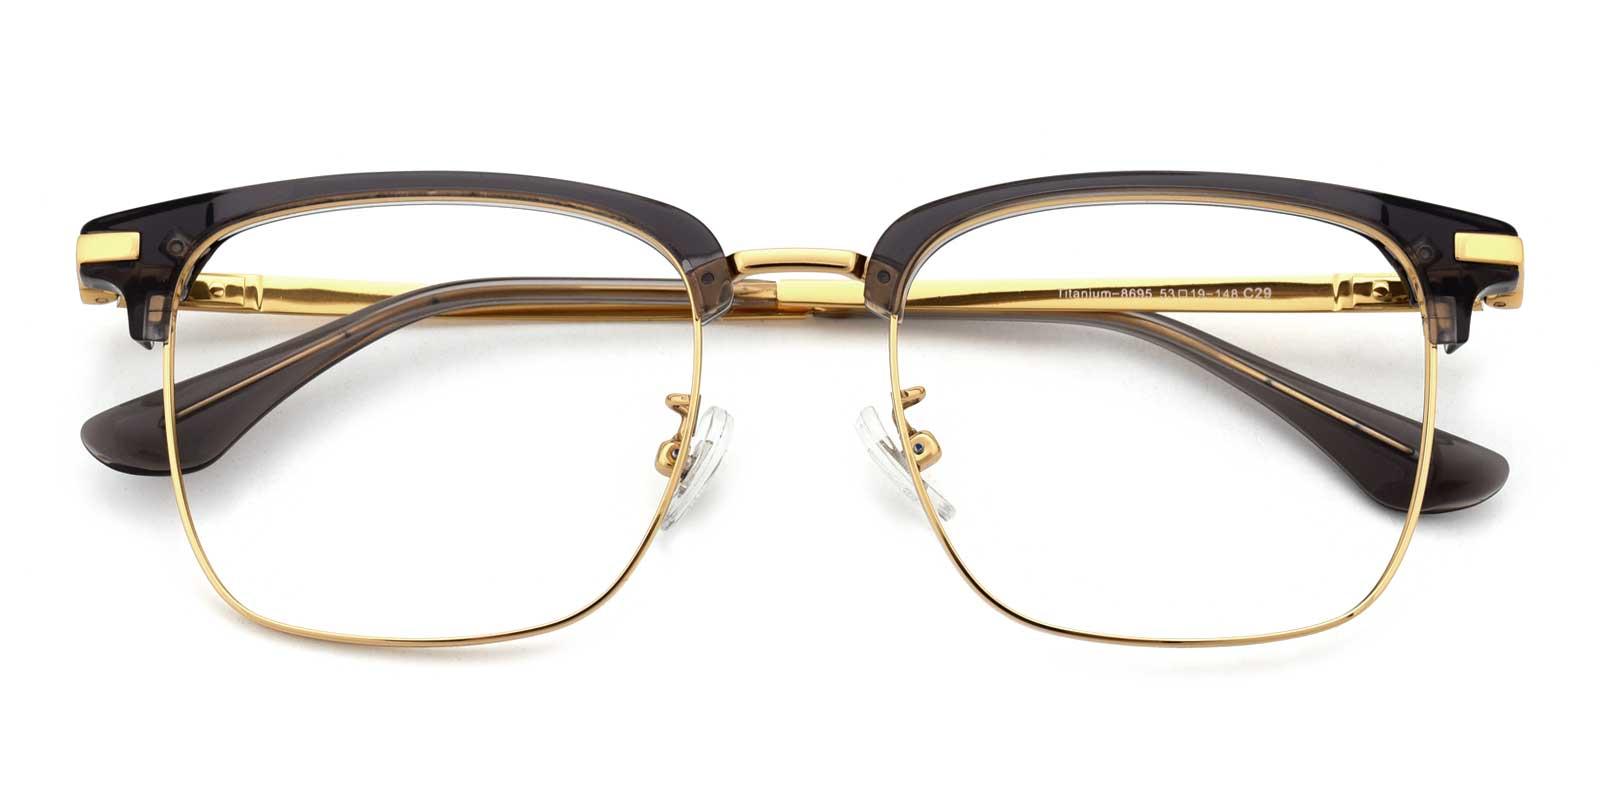 Hilbert-Gray-Browline-Titanium-Eyeglasses-detail